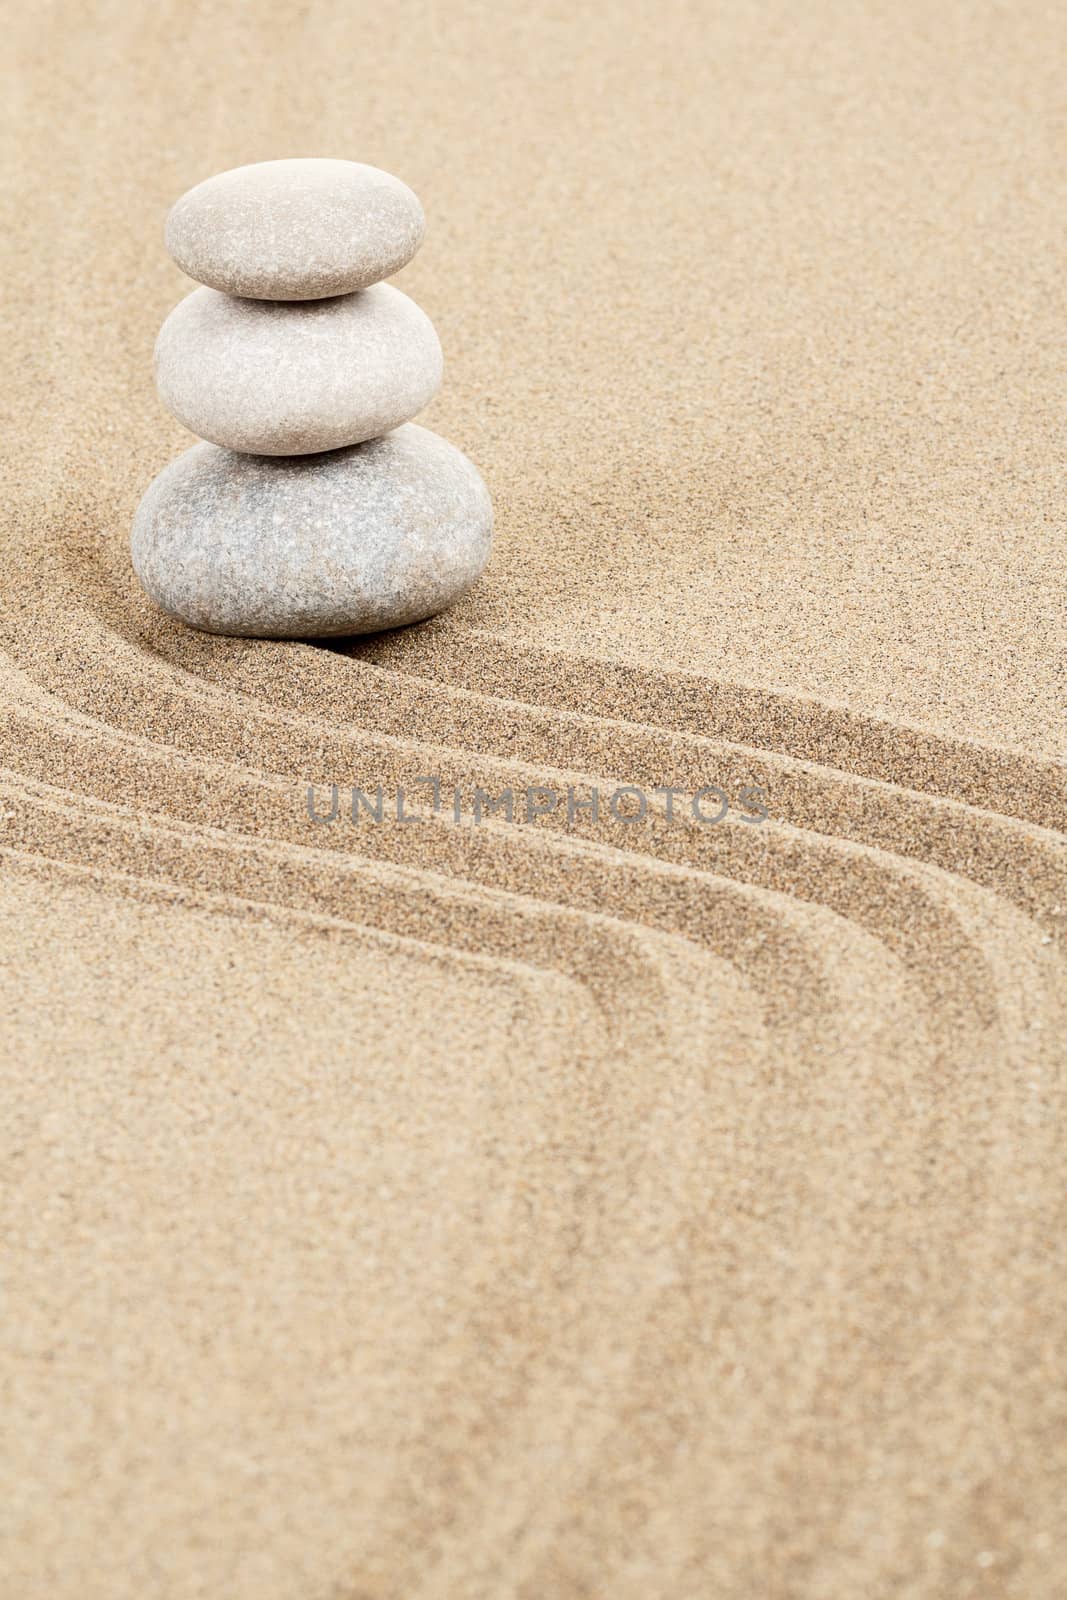 Balance of three zen stones in sand 